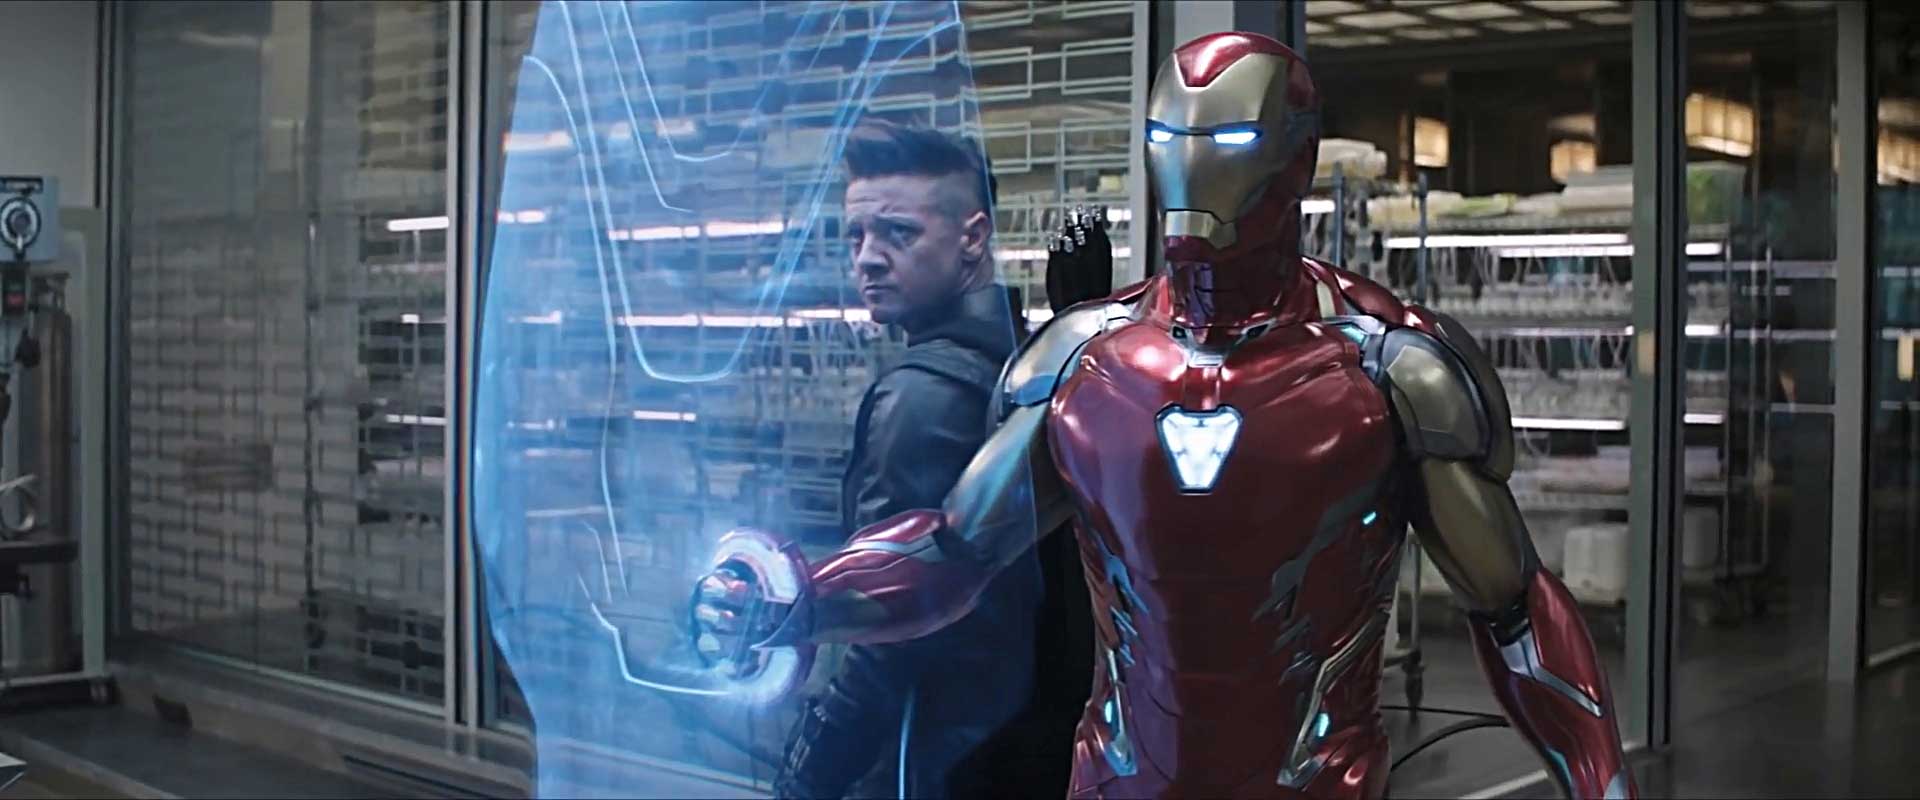 Avengers Endgame Movie Review Iron Man Hawkeye